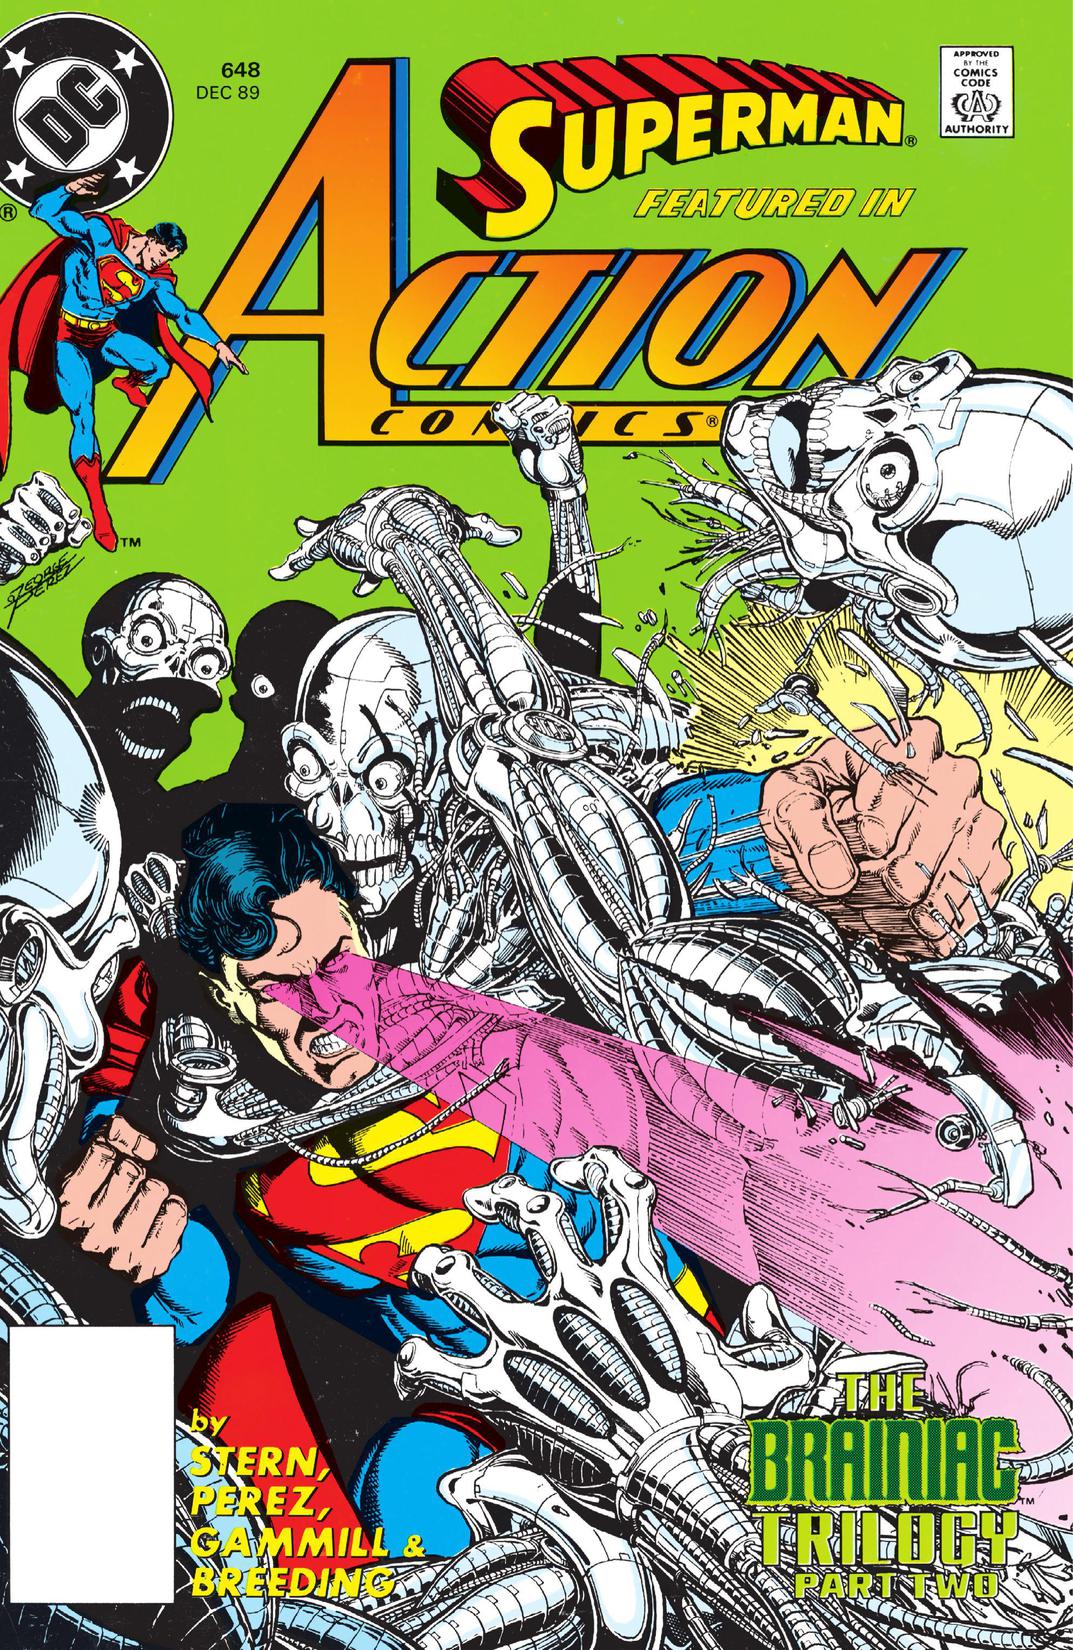 Action Comics (1938-2011) #648 preview images